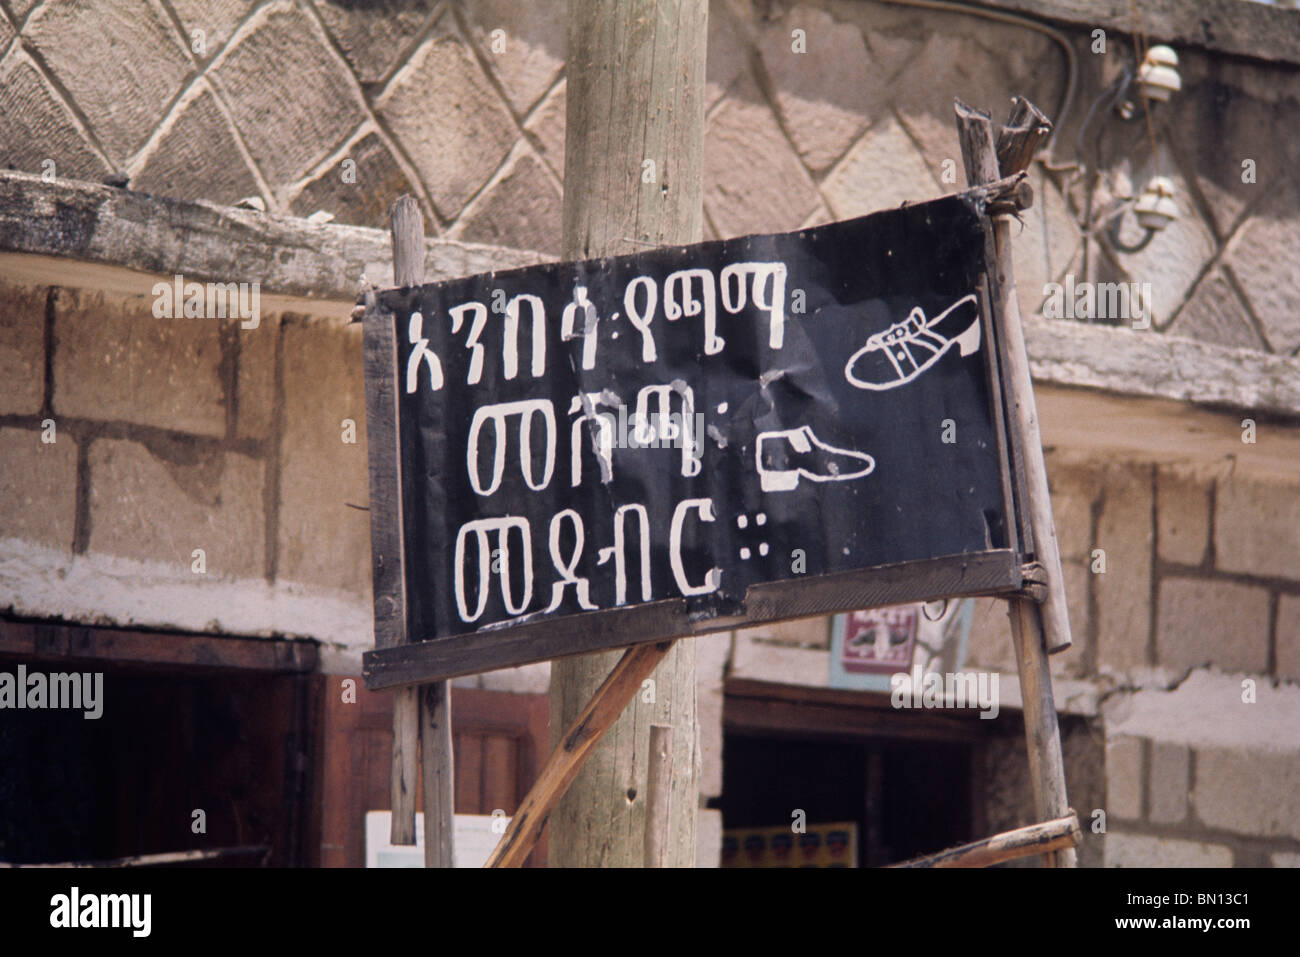 Amharic letters announce an Ethiopian shoe repair shop sign Stock Photo